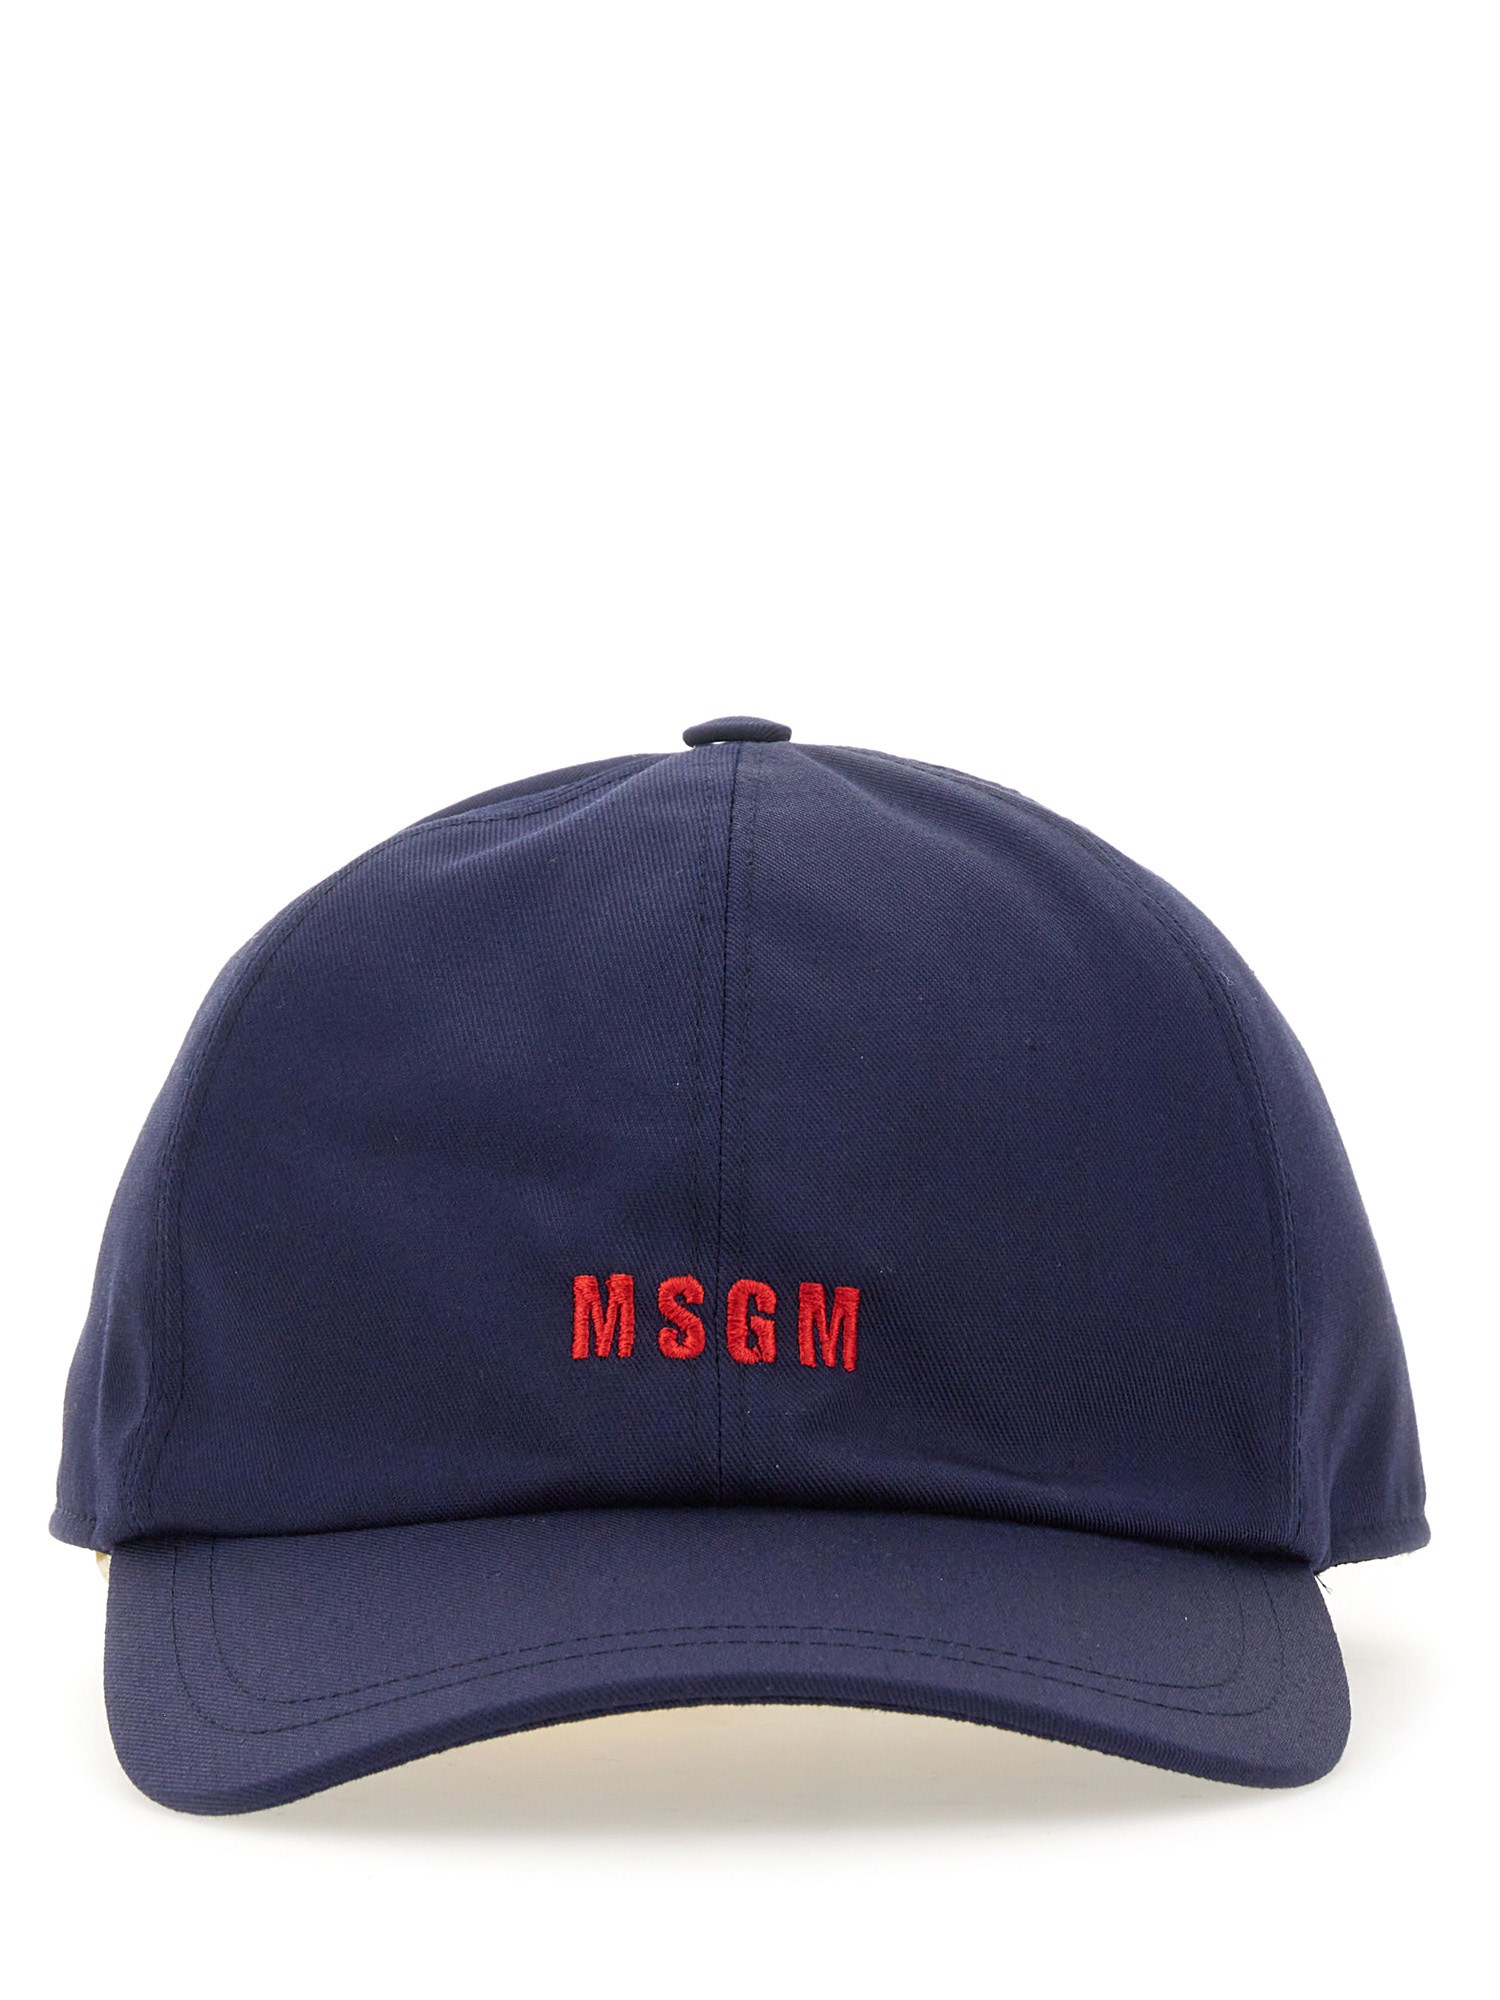 msgm baseball cap